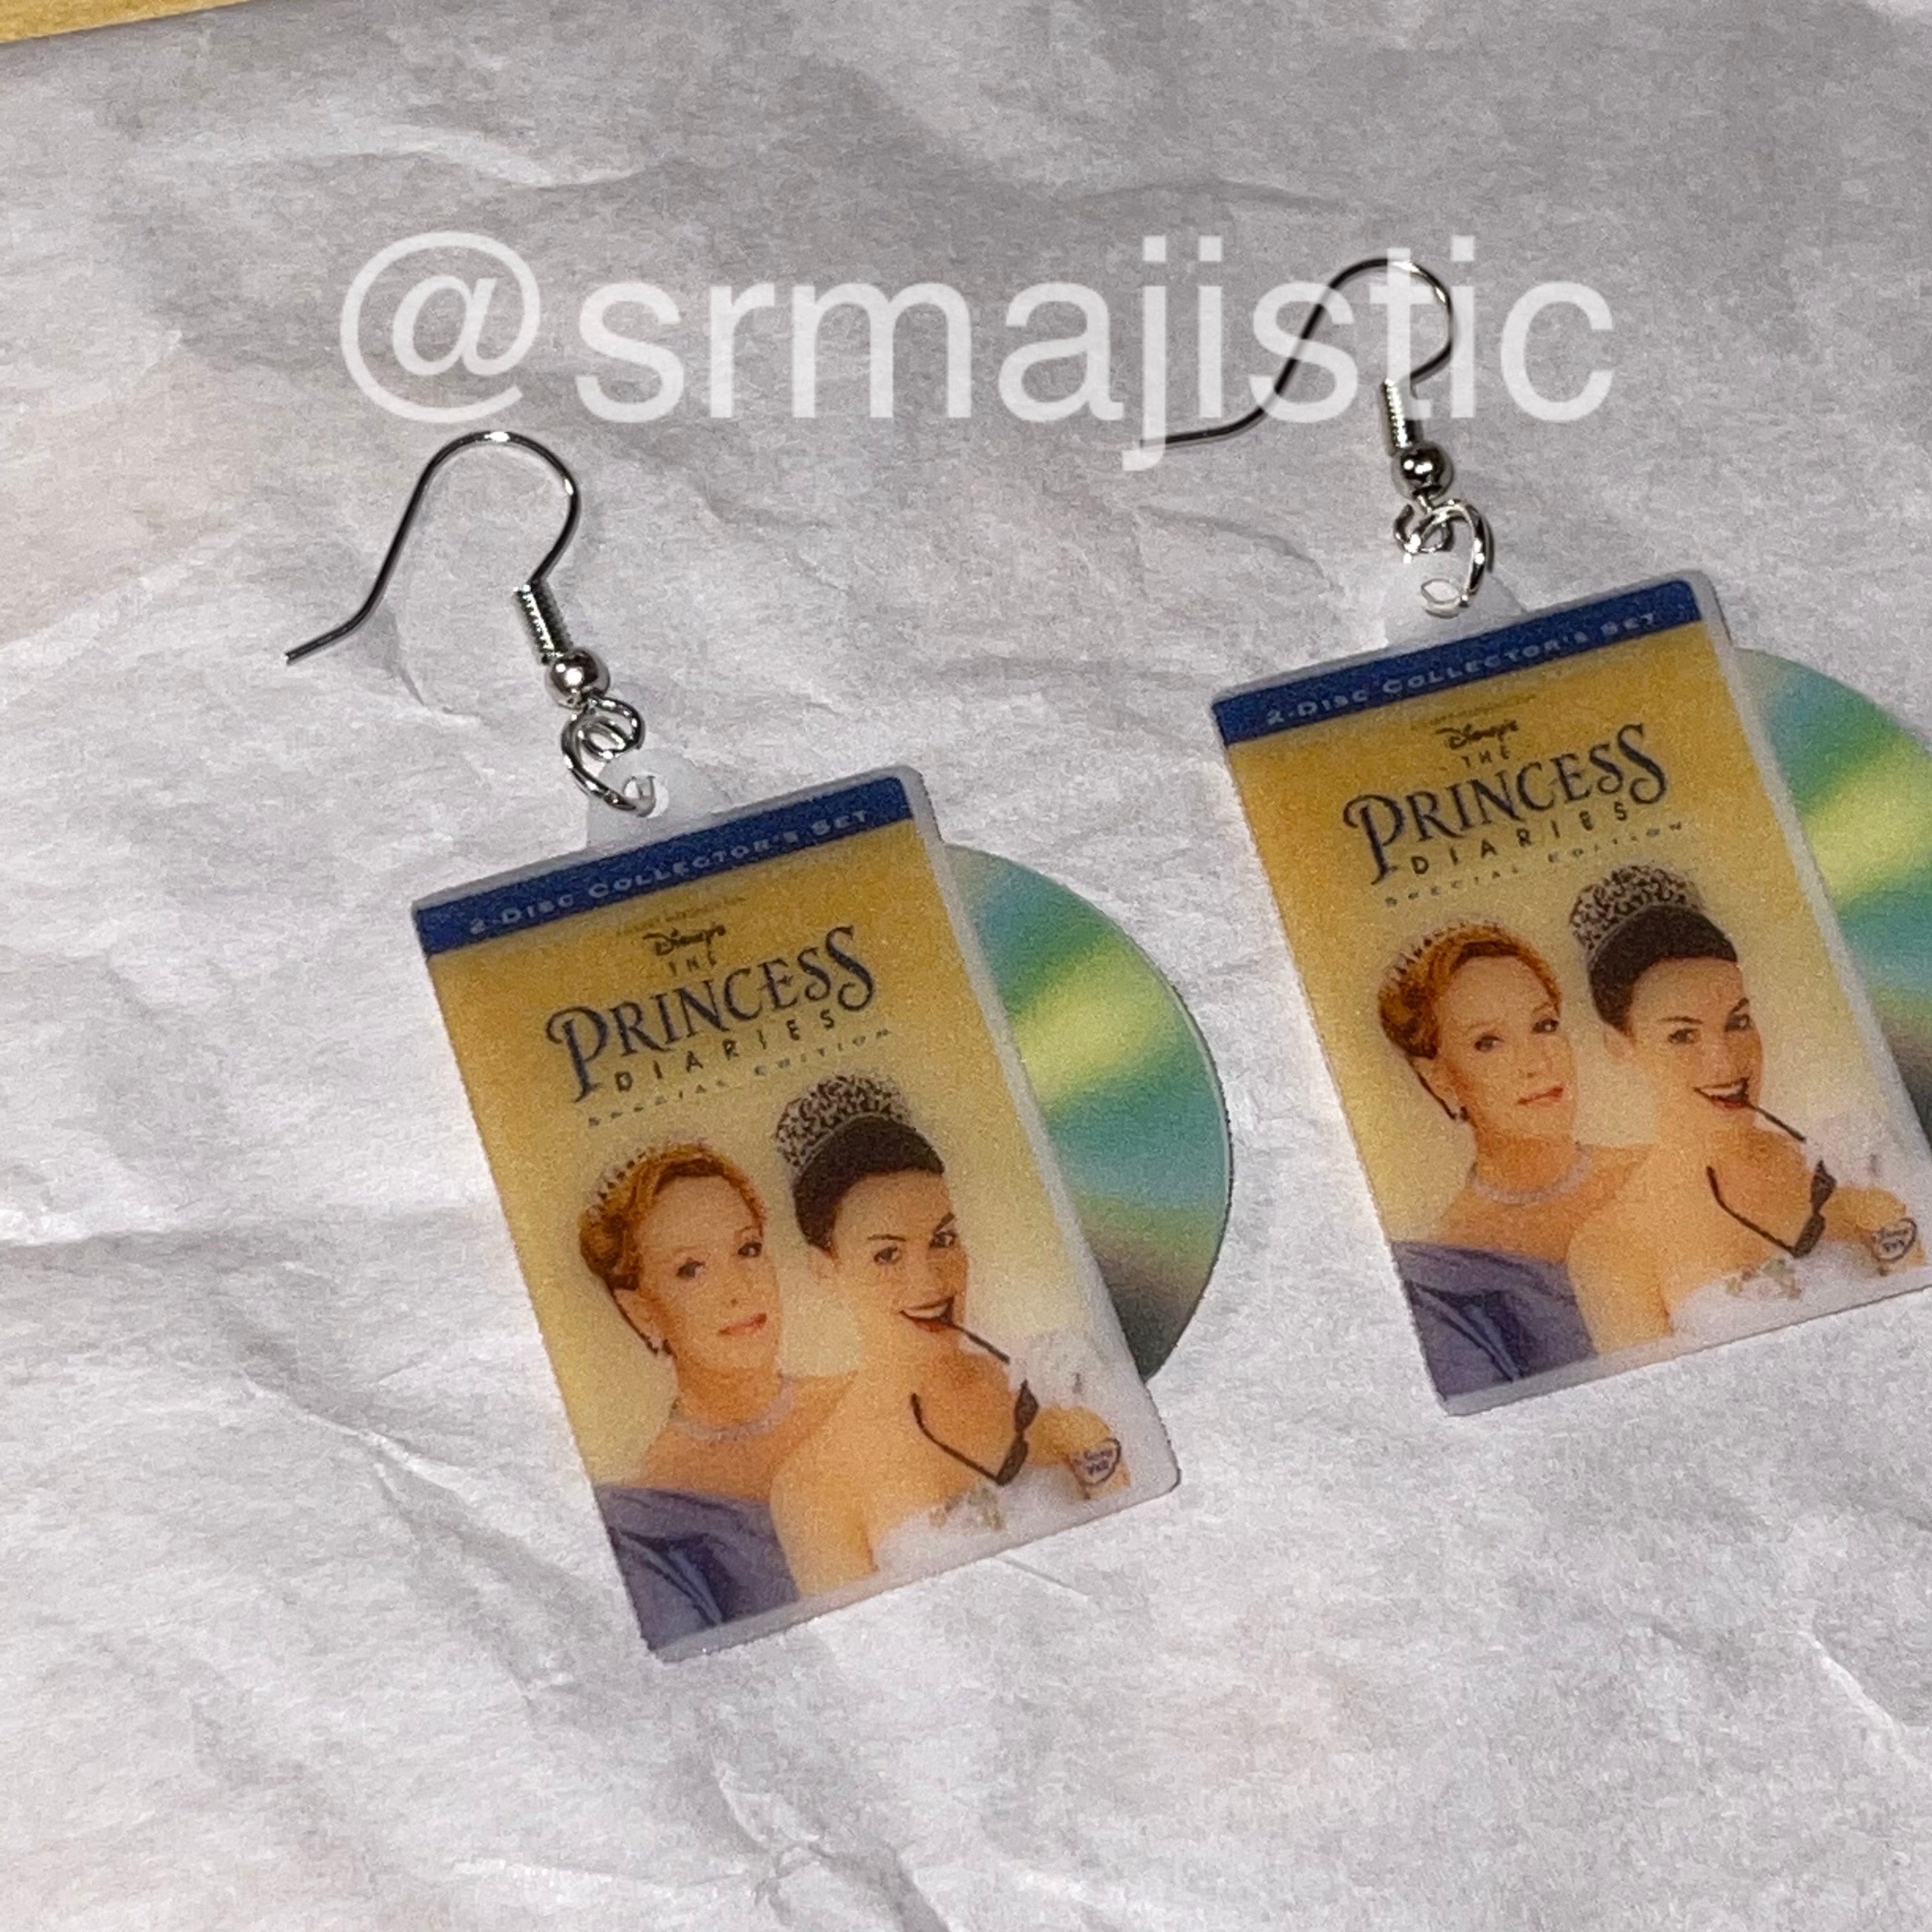 The Princess Diaries (2001) DVD 2D detailed Handmade Earrings!